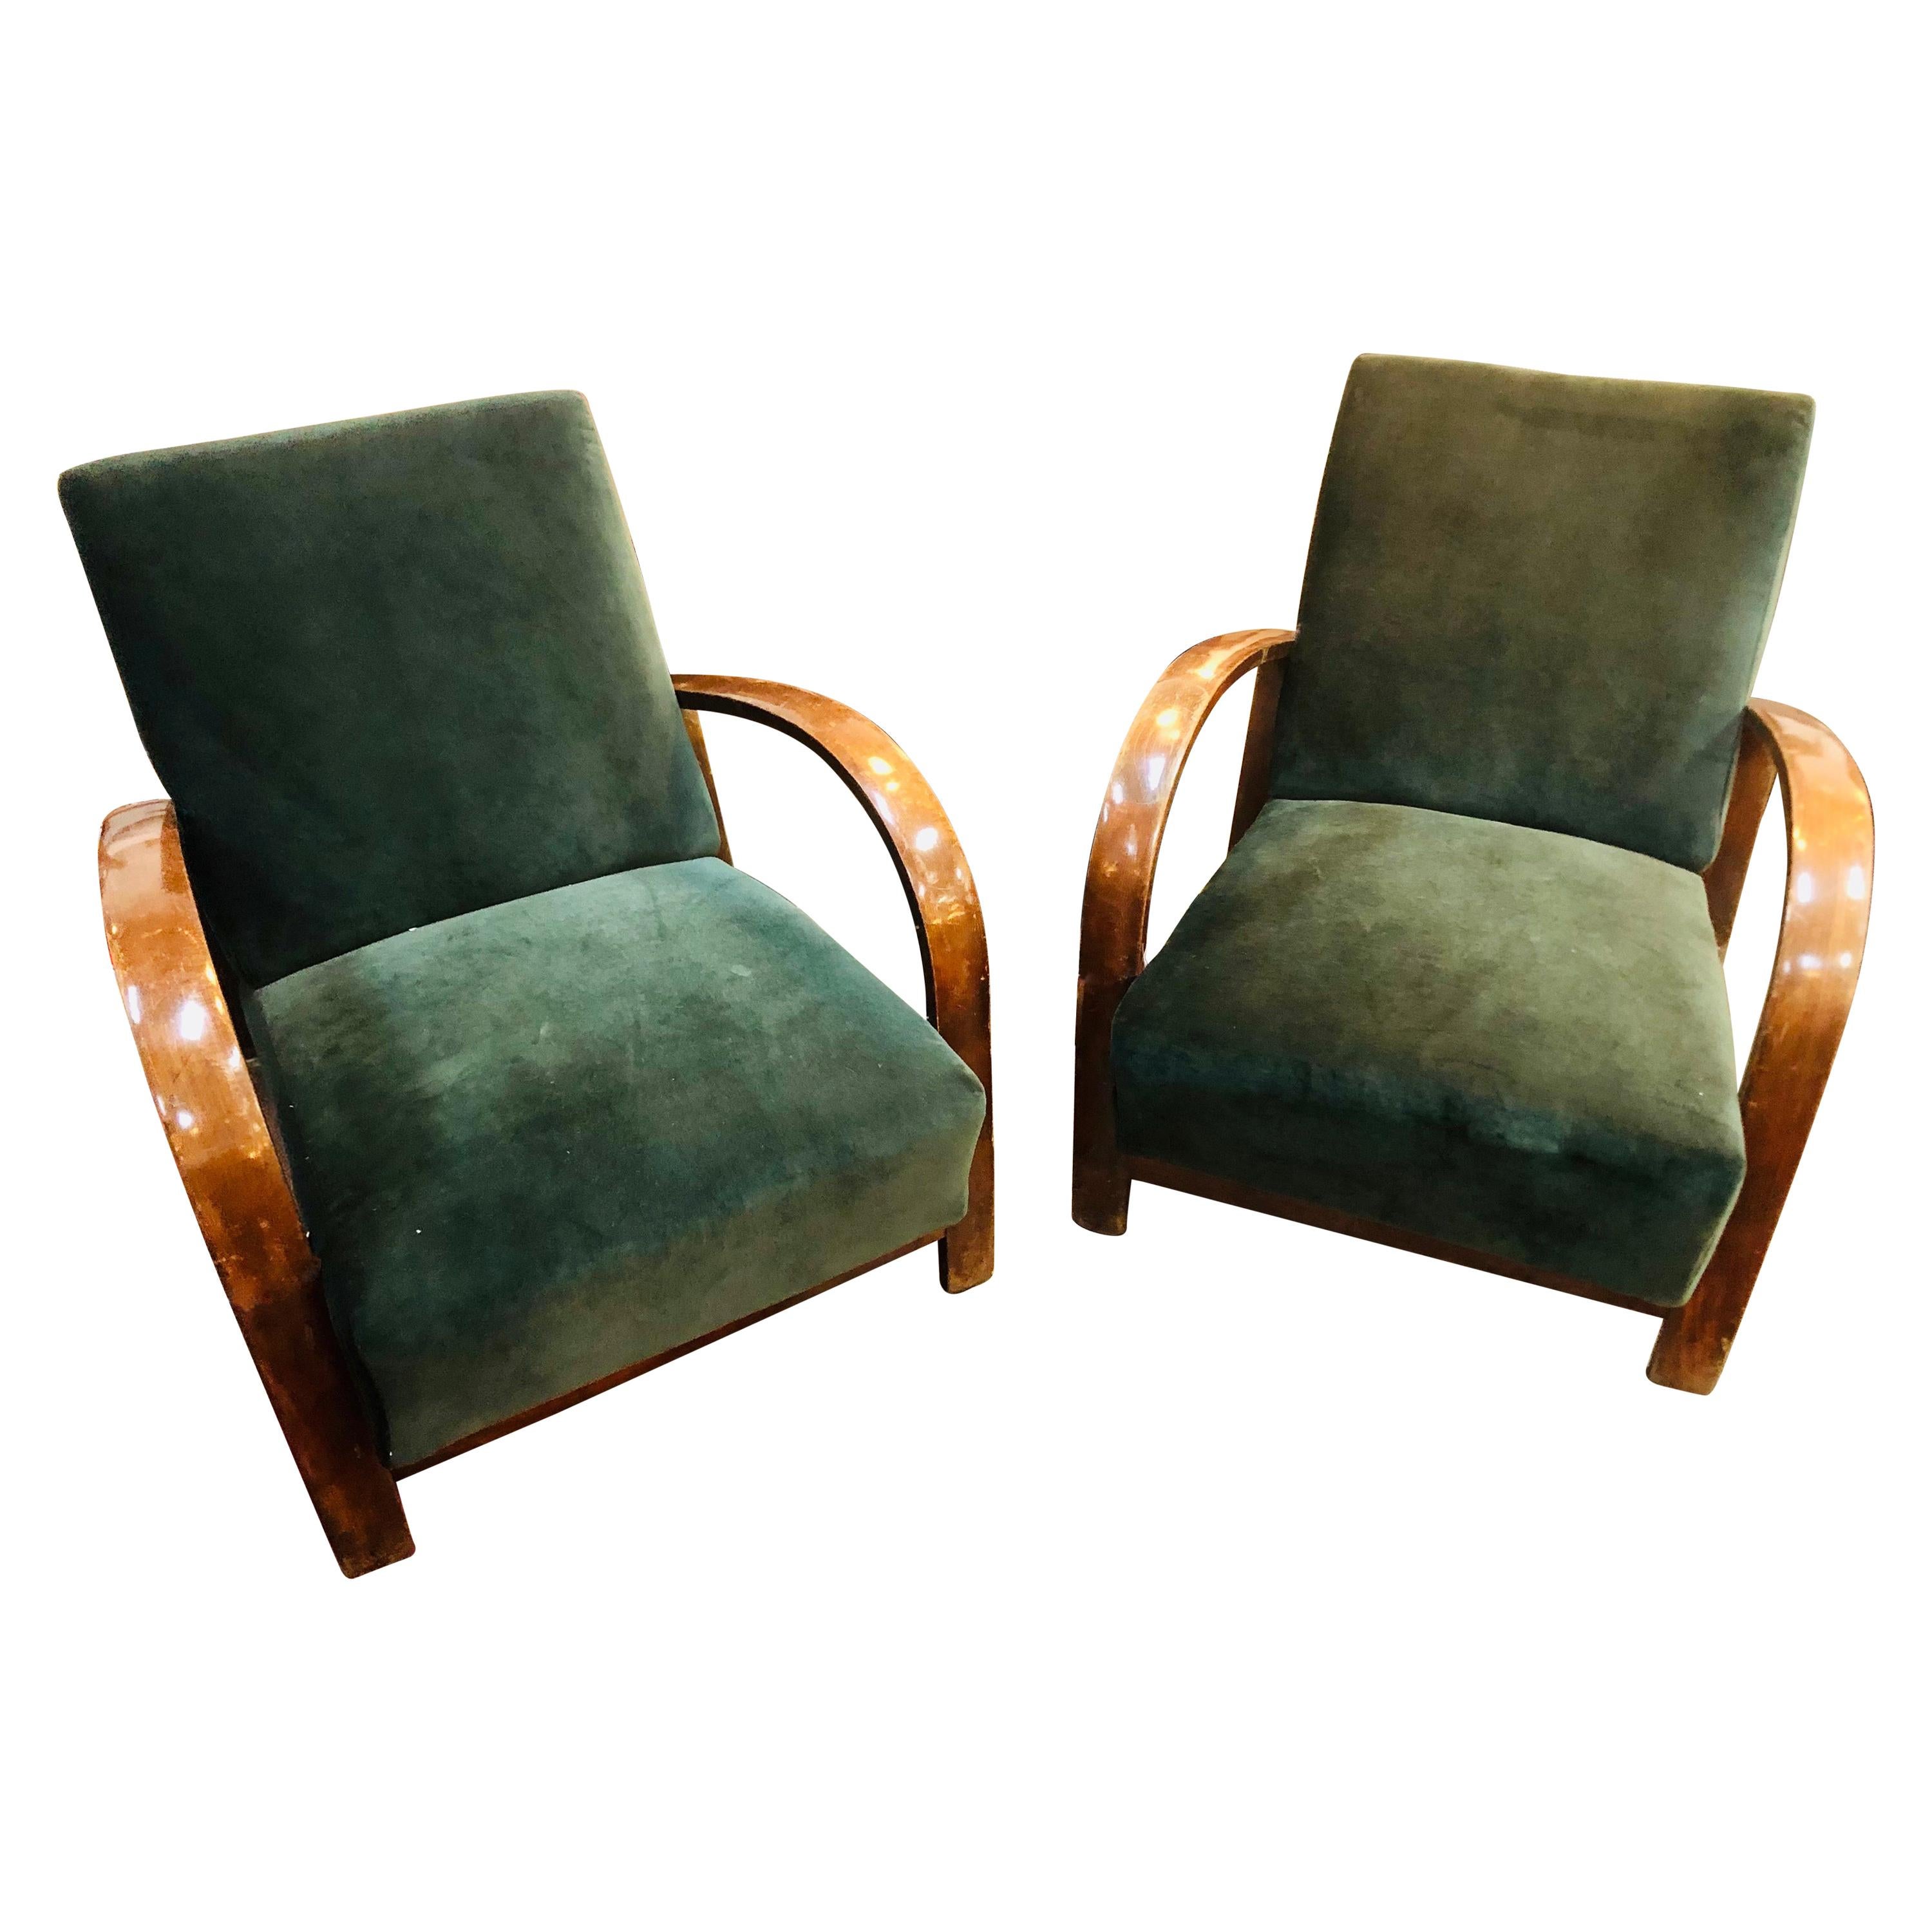 Pair of French Green Velvet Art Deco Chairs